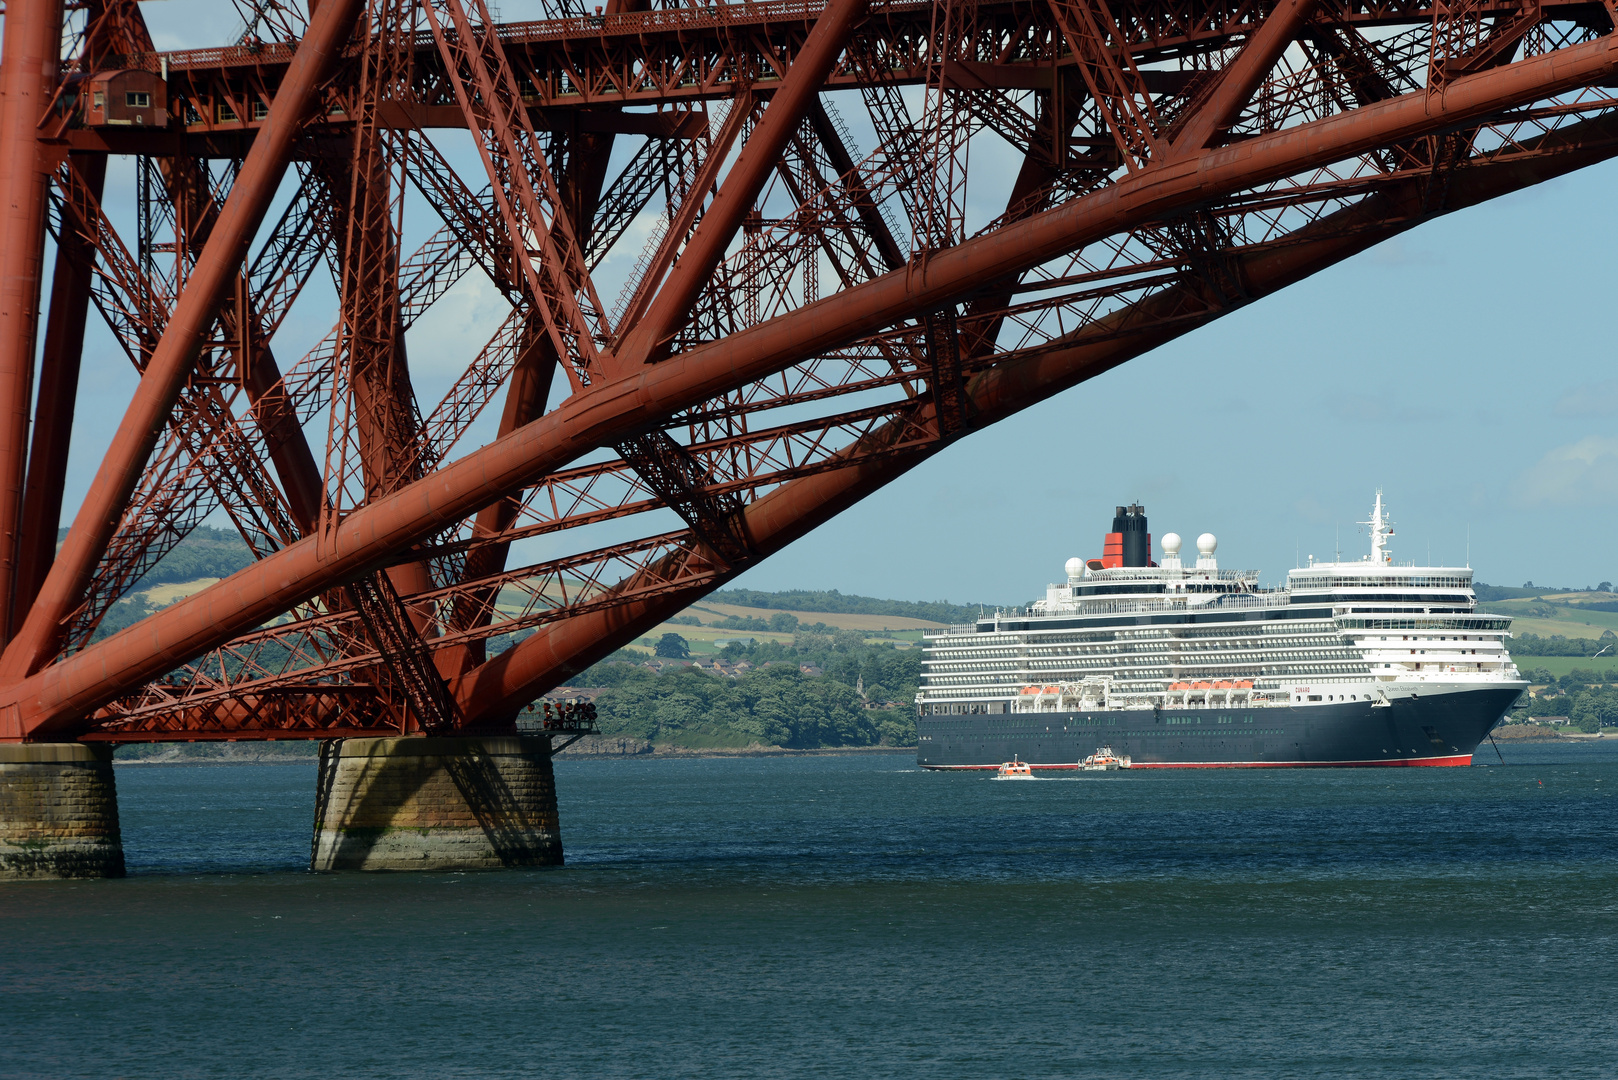 mv Queen Elizabeth anchoring near Edinburgh